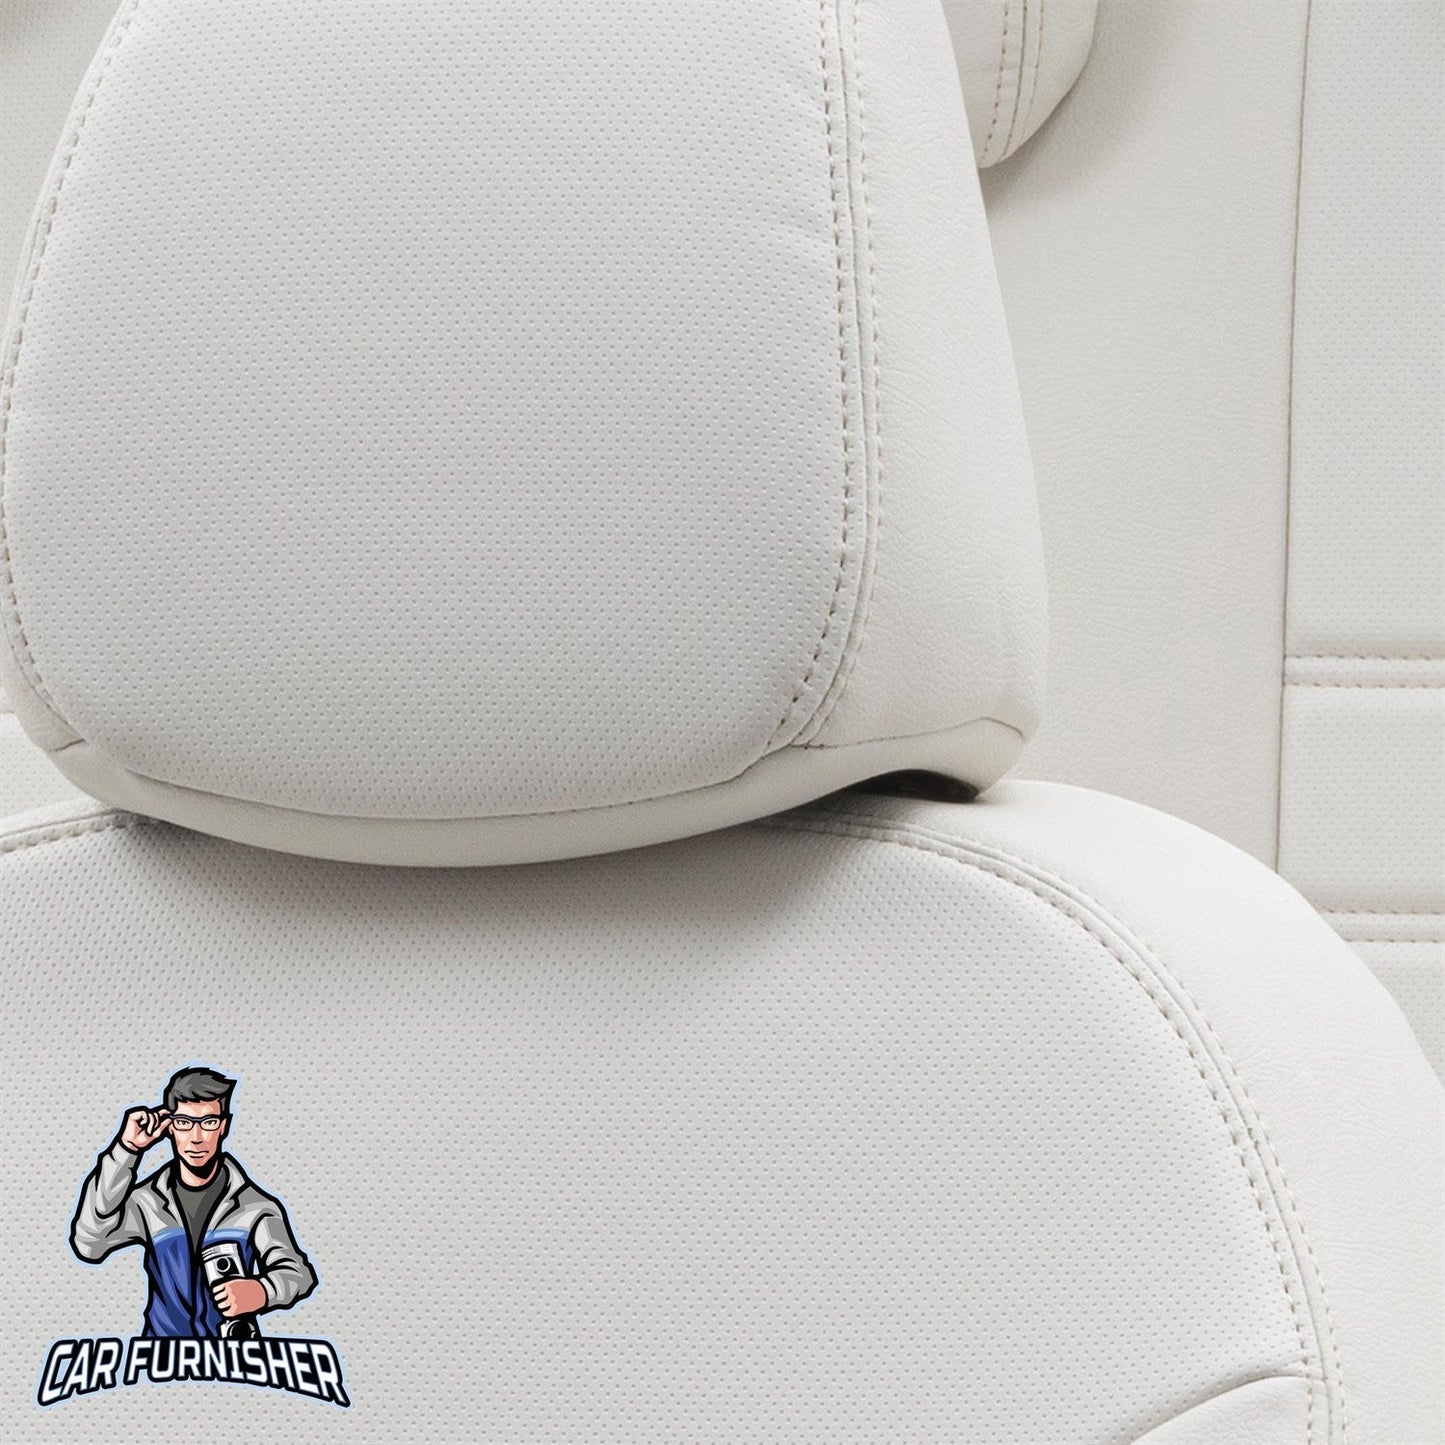 Hyundai i10 Seat Covers Istanbul Leather Design Ivory Leather